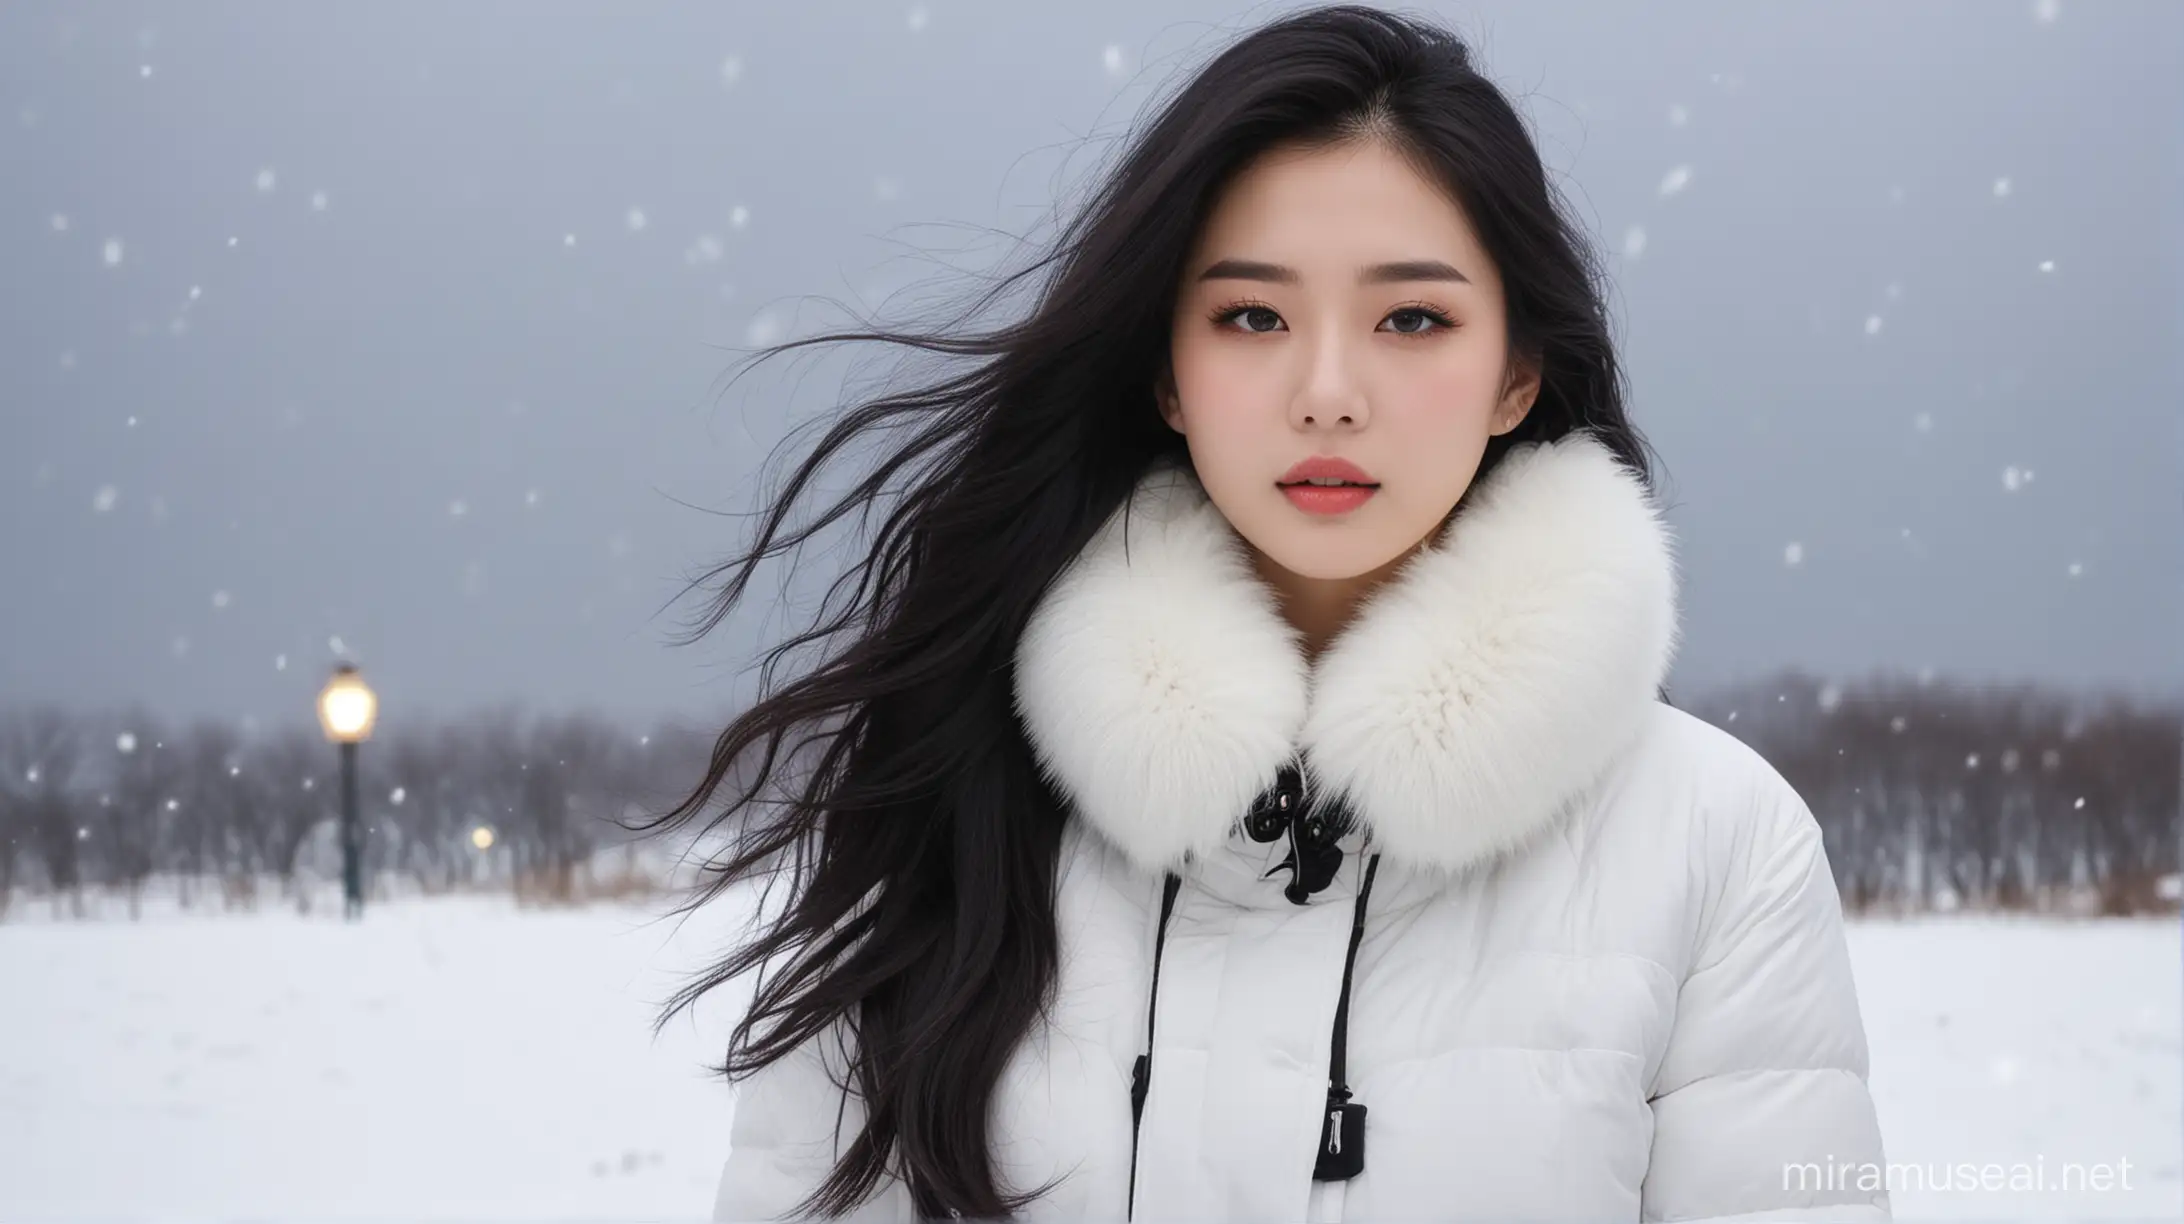 Elegant Woman in Snowy Weather White Fur Collar Black Down Jacket Portrait